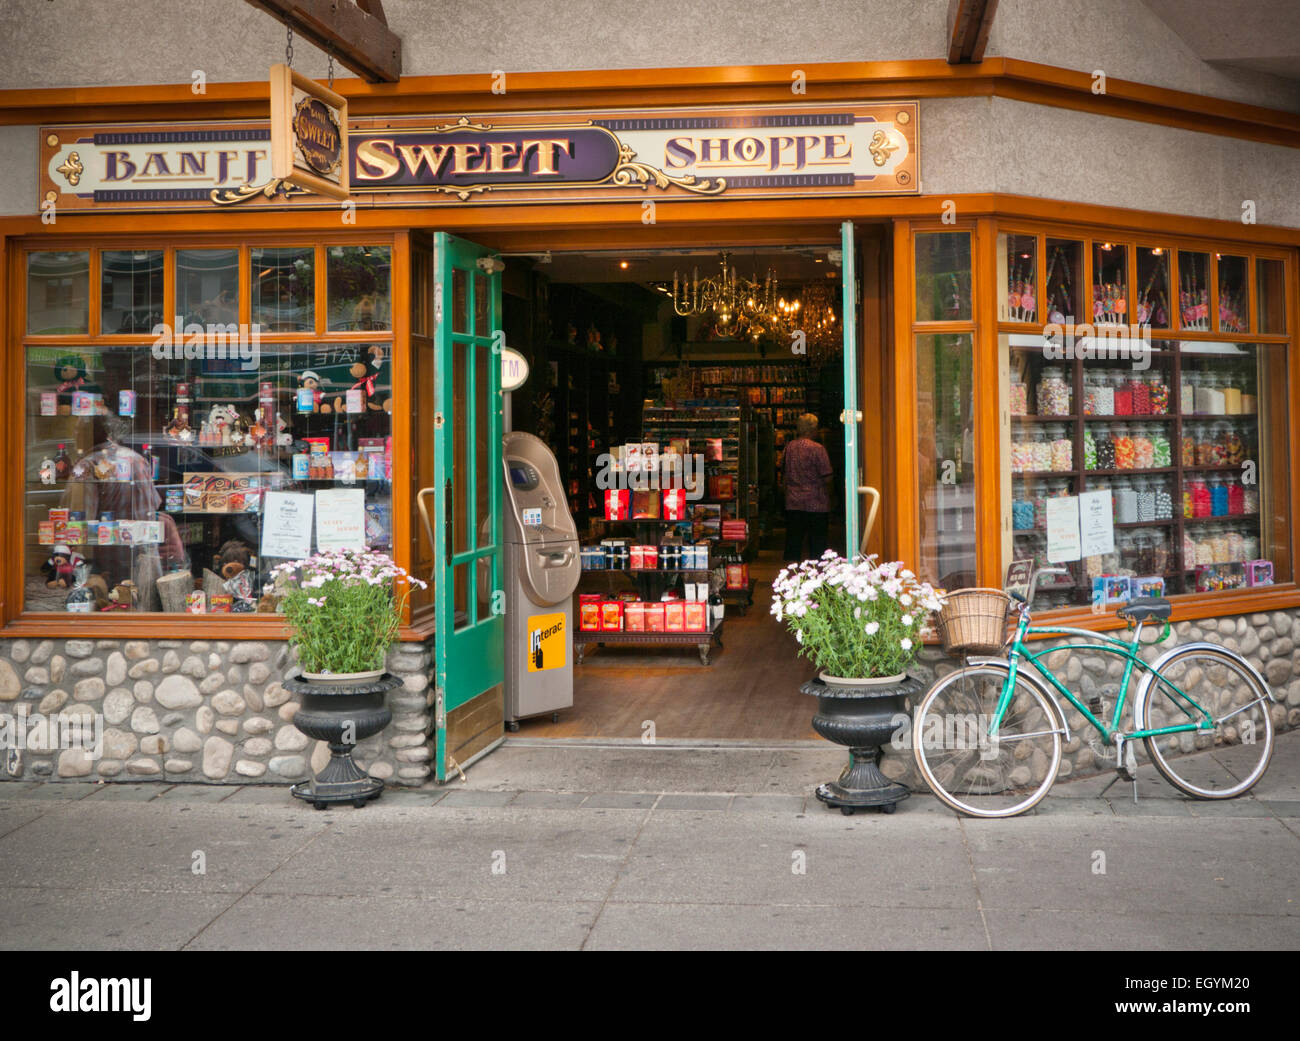 Sweet Shop dans la région de Banff Alberta Canada Banque D'Images